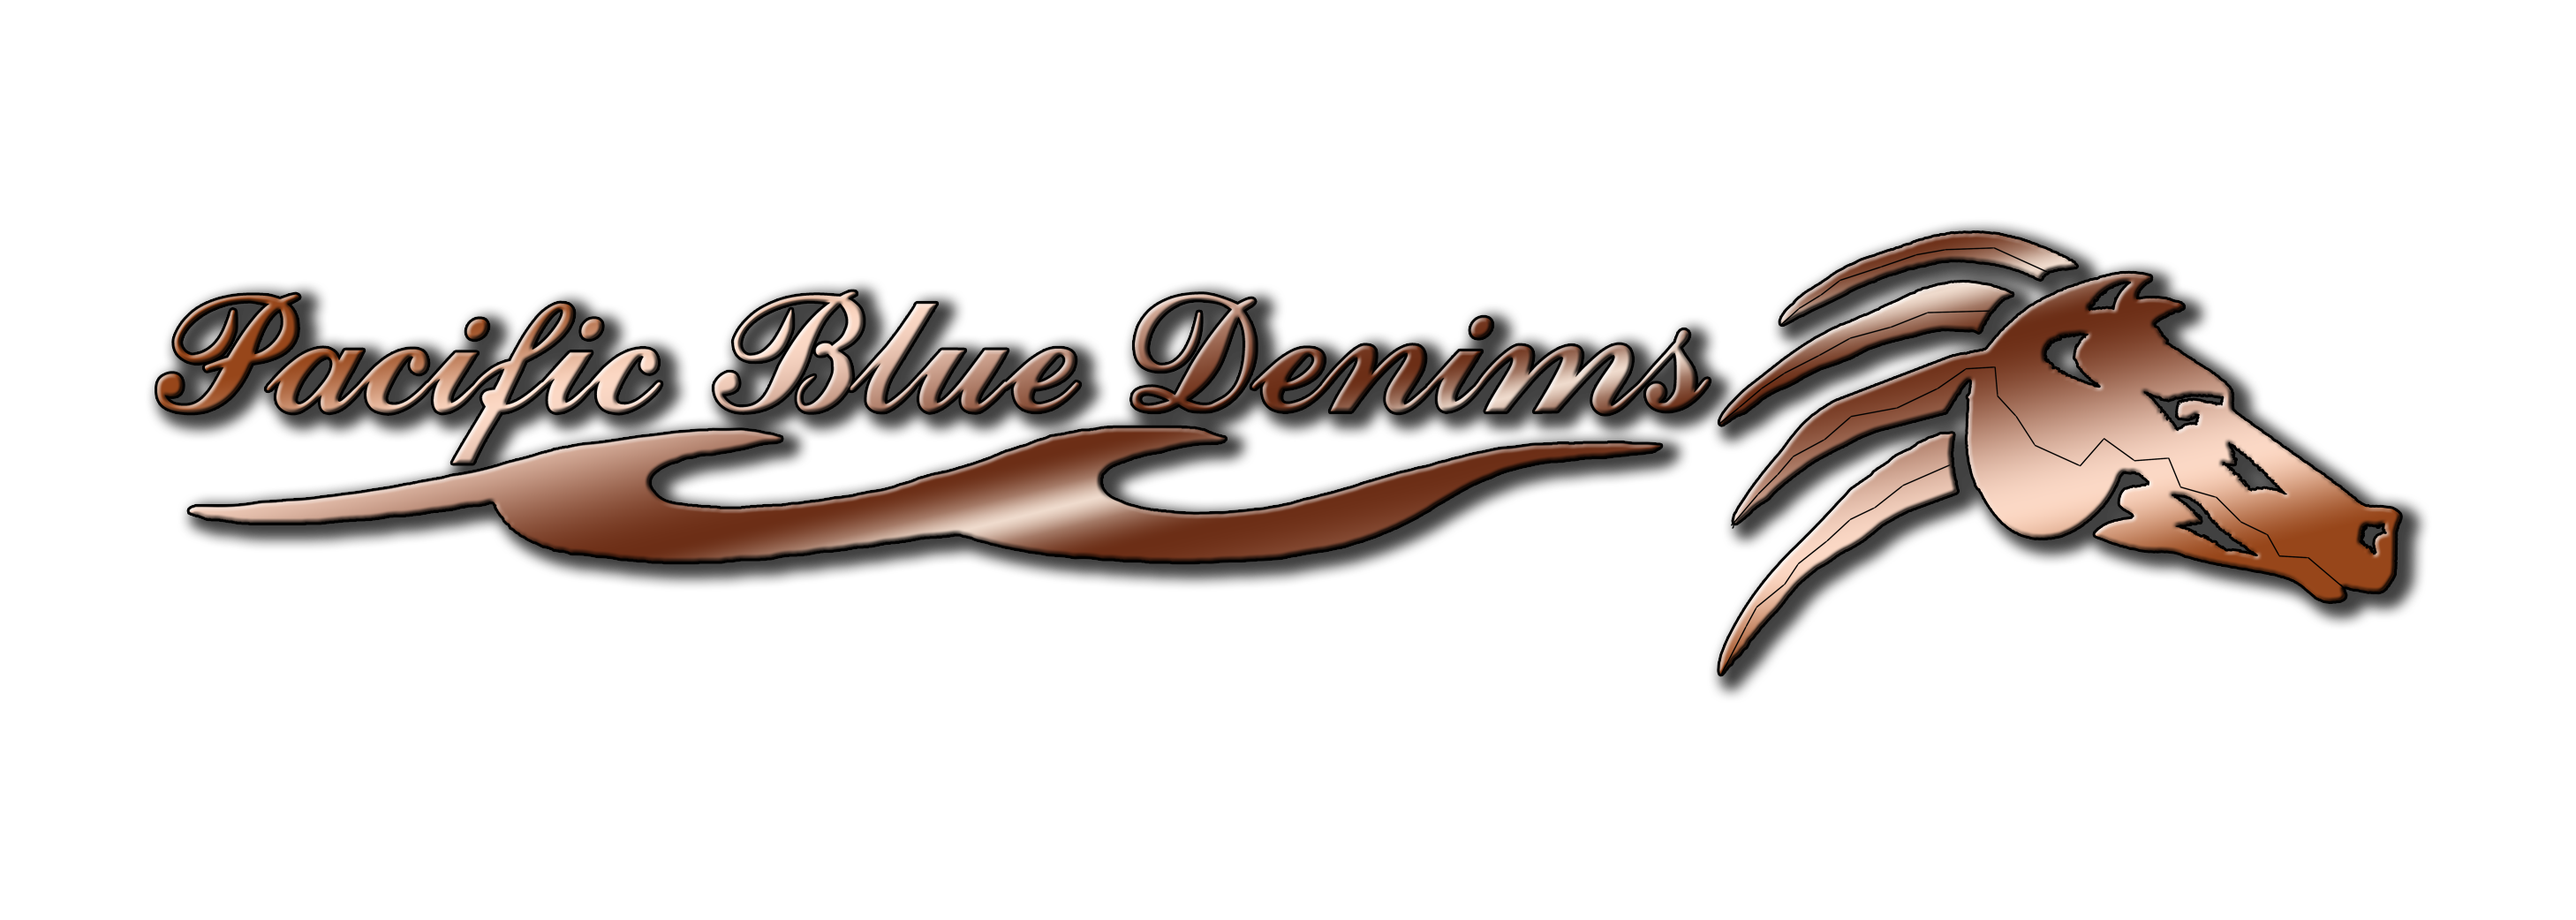 Pacific Blue Denims